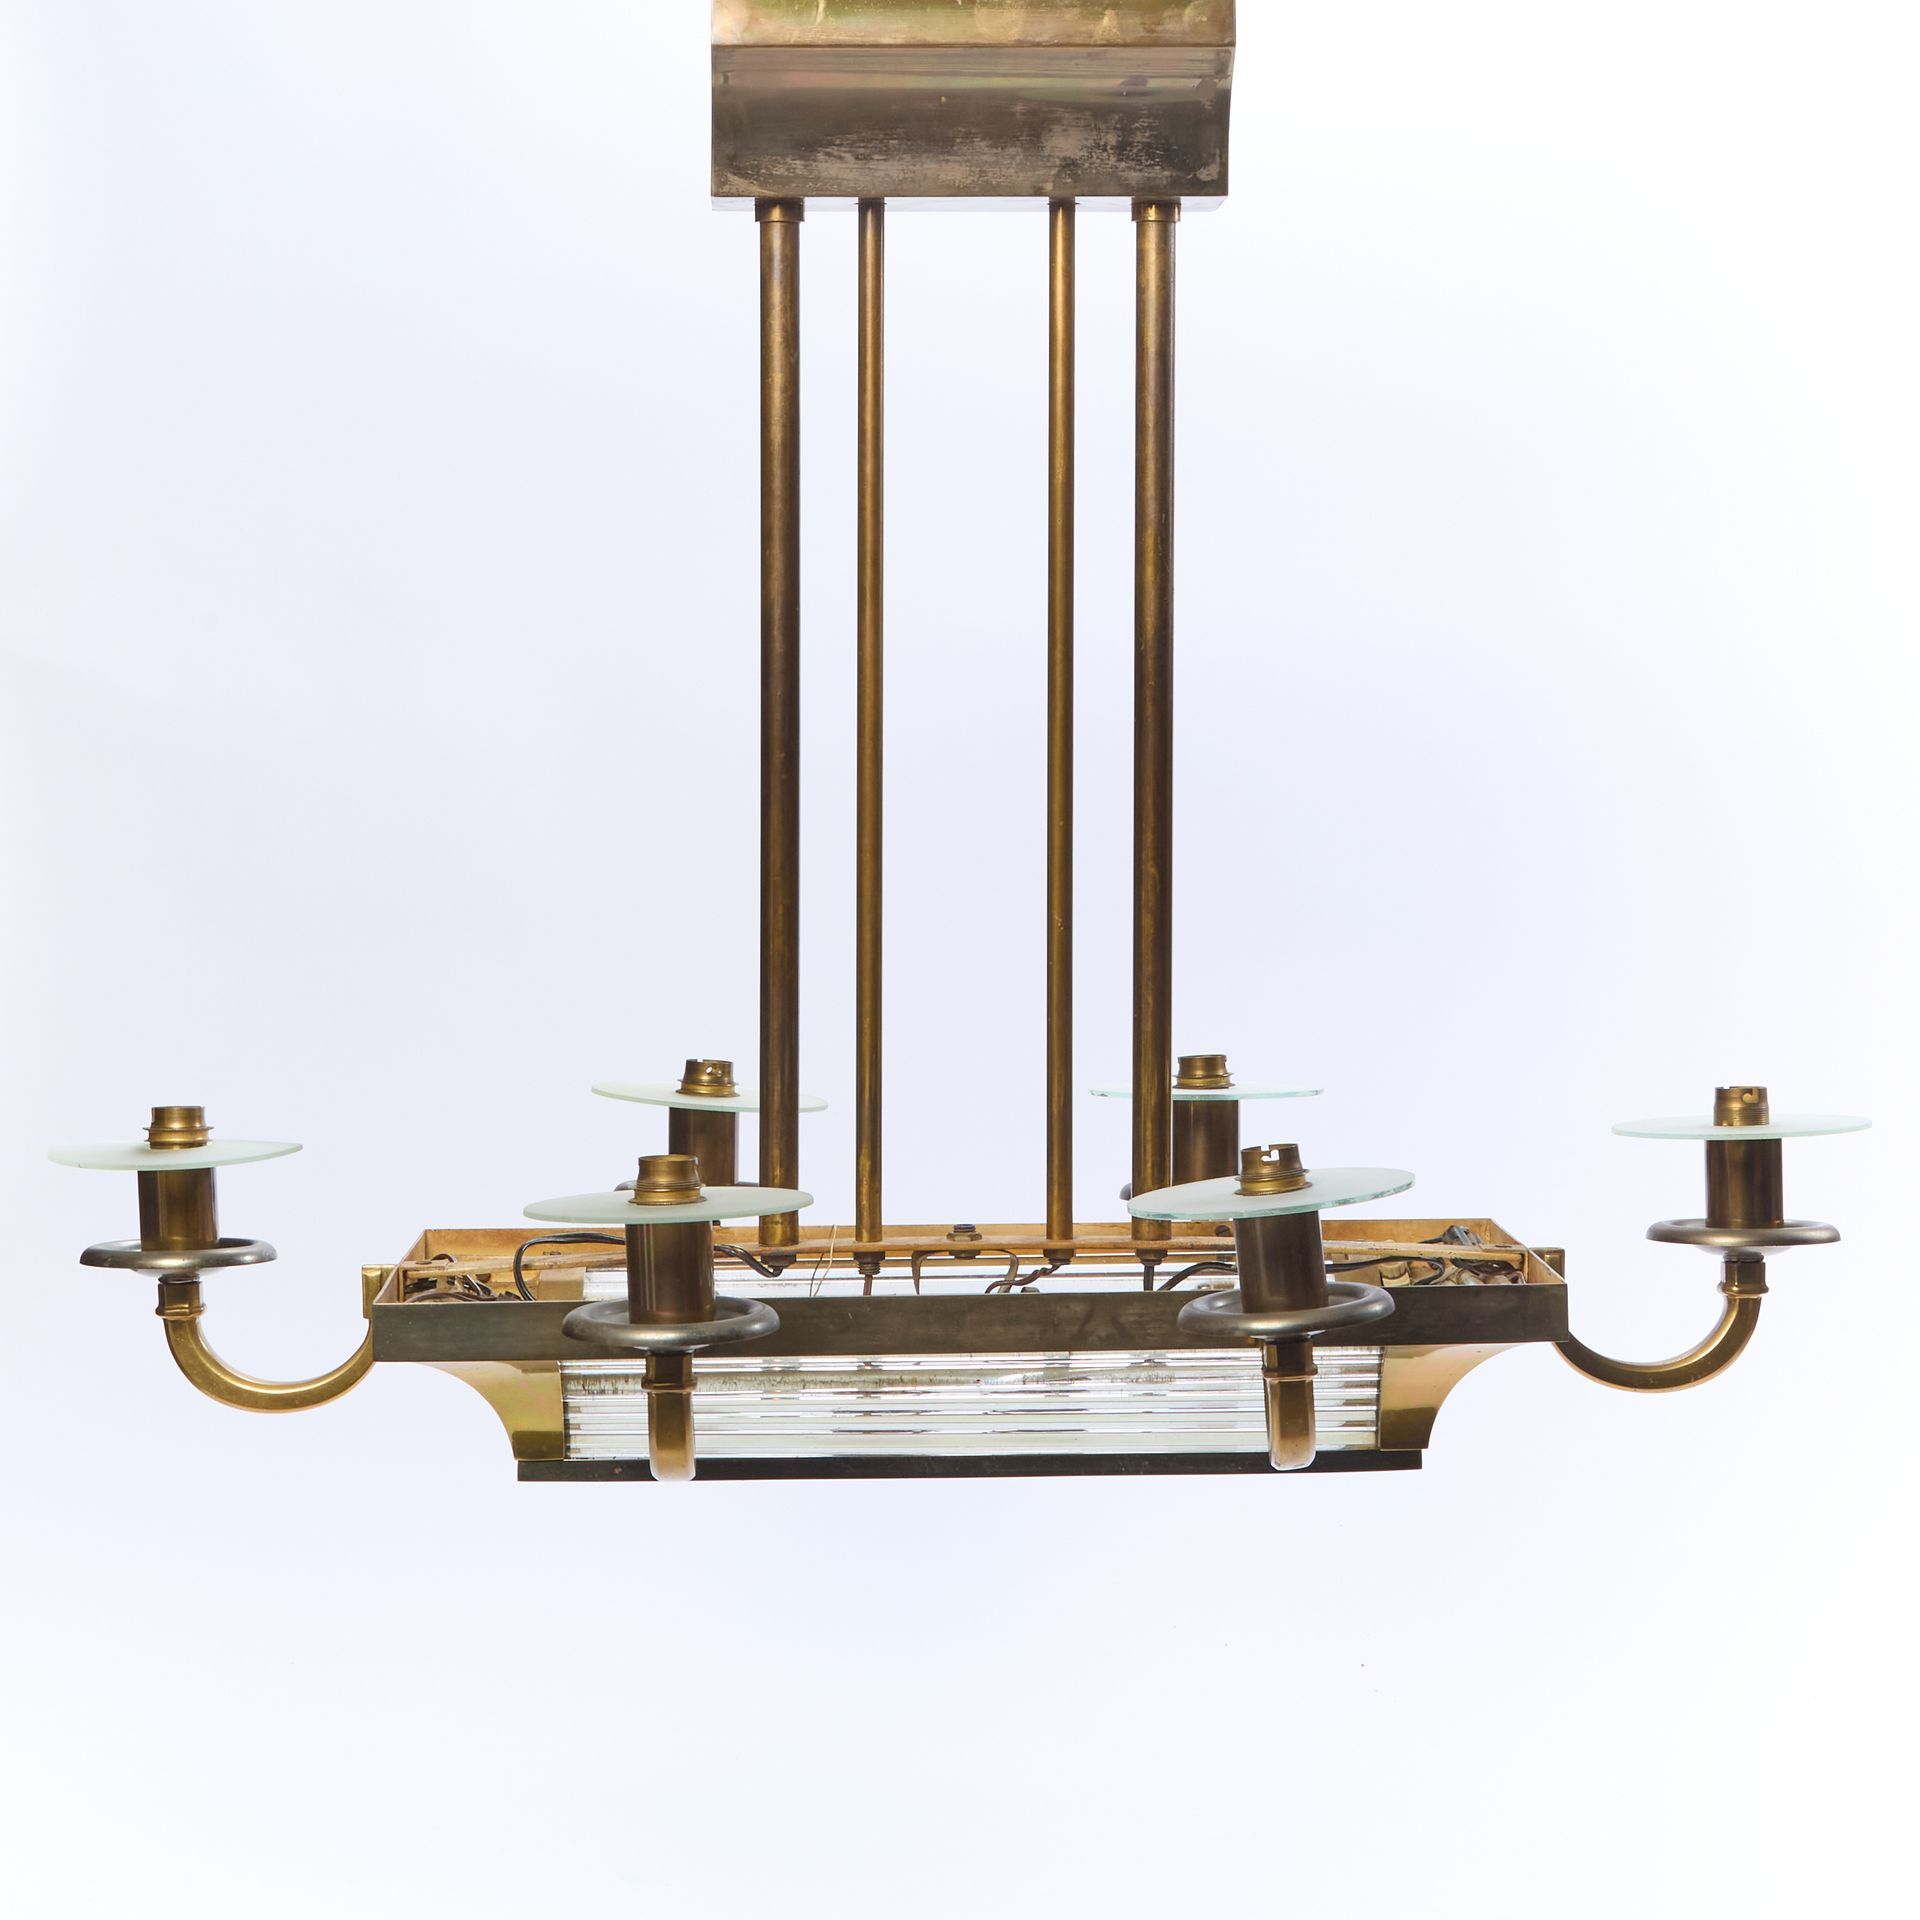 Null 归功于亨利-佩蒂托（1914-1938 年）。
长方形镀金金属碗形吊坠，带两个暗灯和六个低灯，饰有磨砂玻璃圆盘（其中一个玻璃已损坏）。 
制作时间约 &hellip;